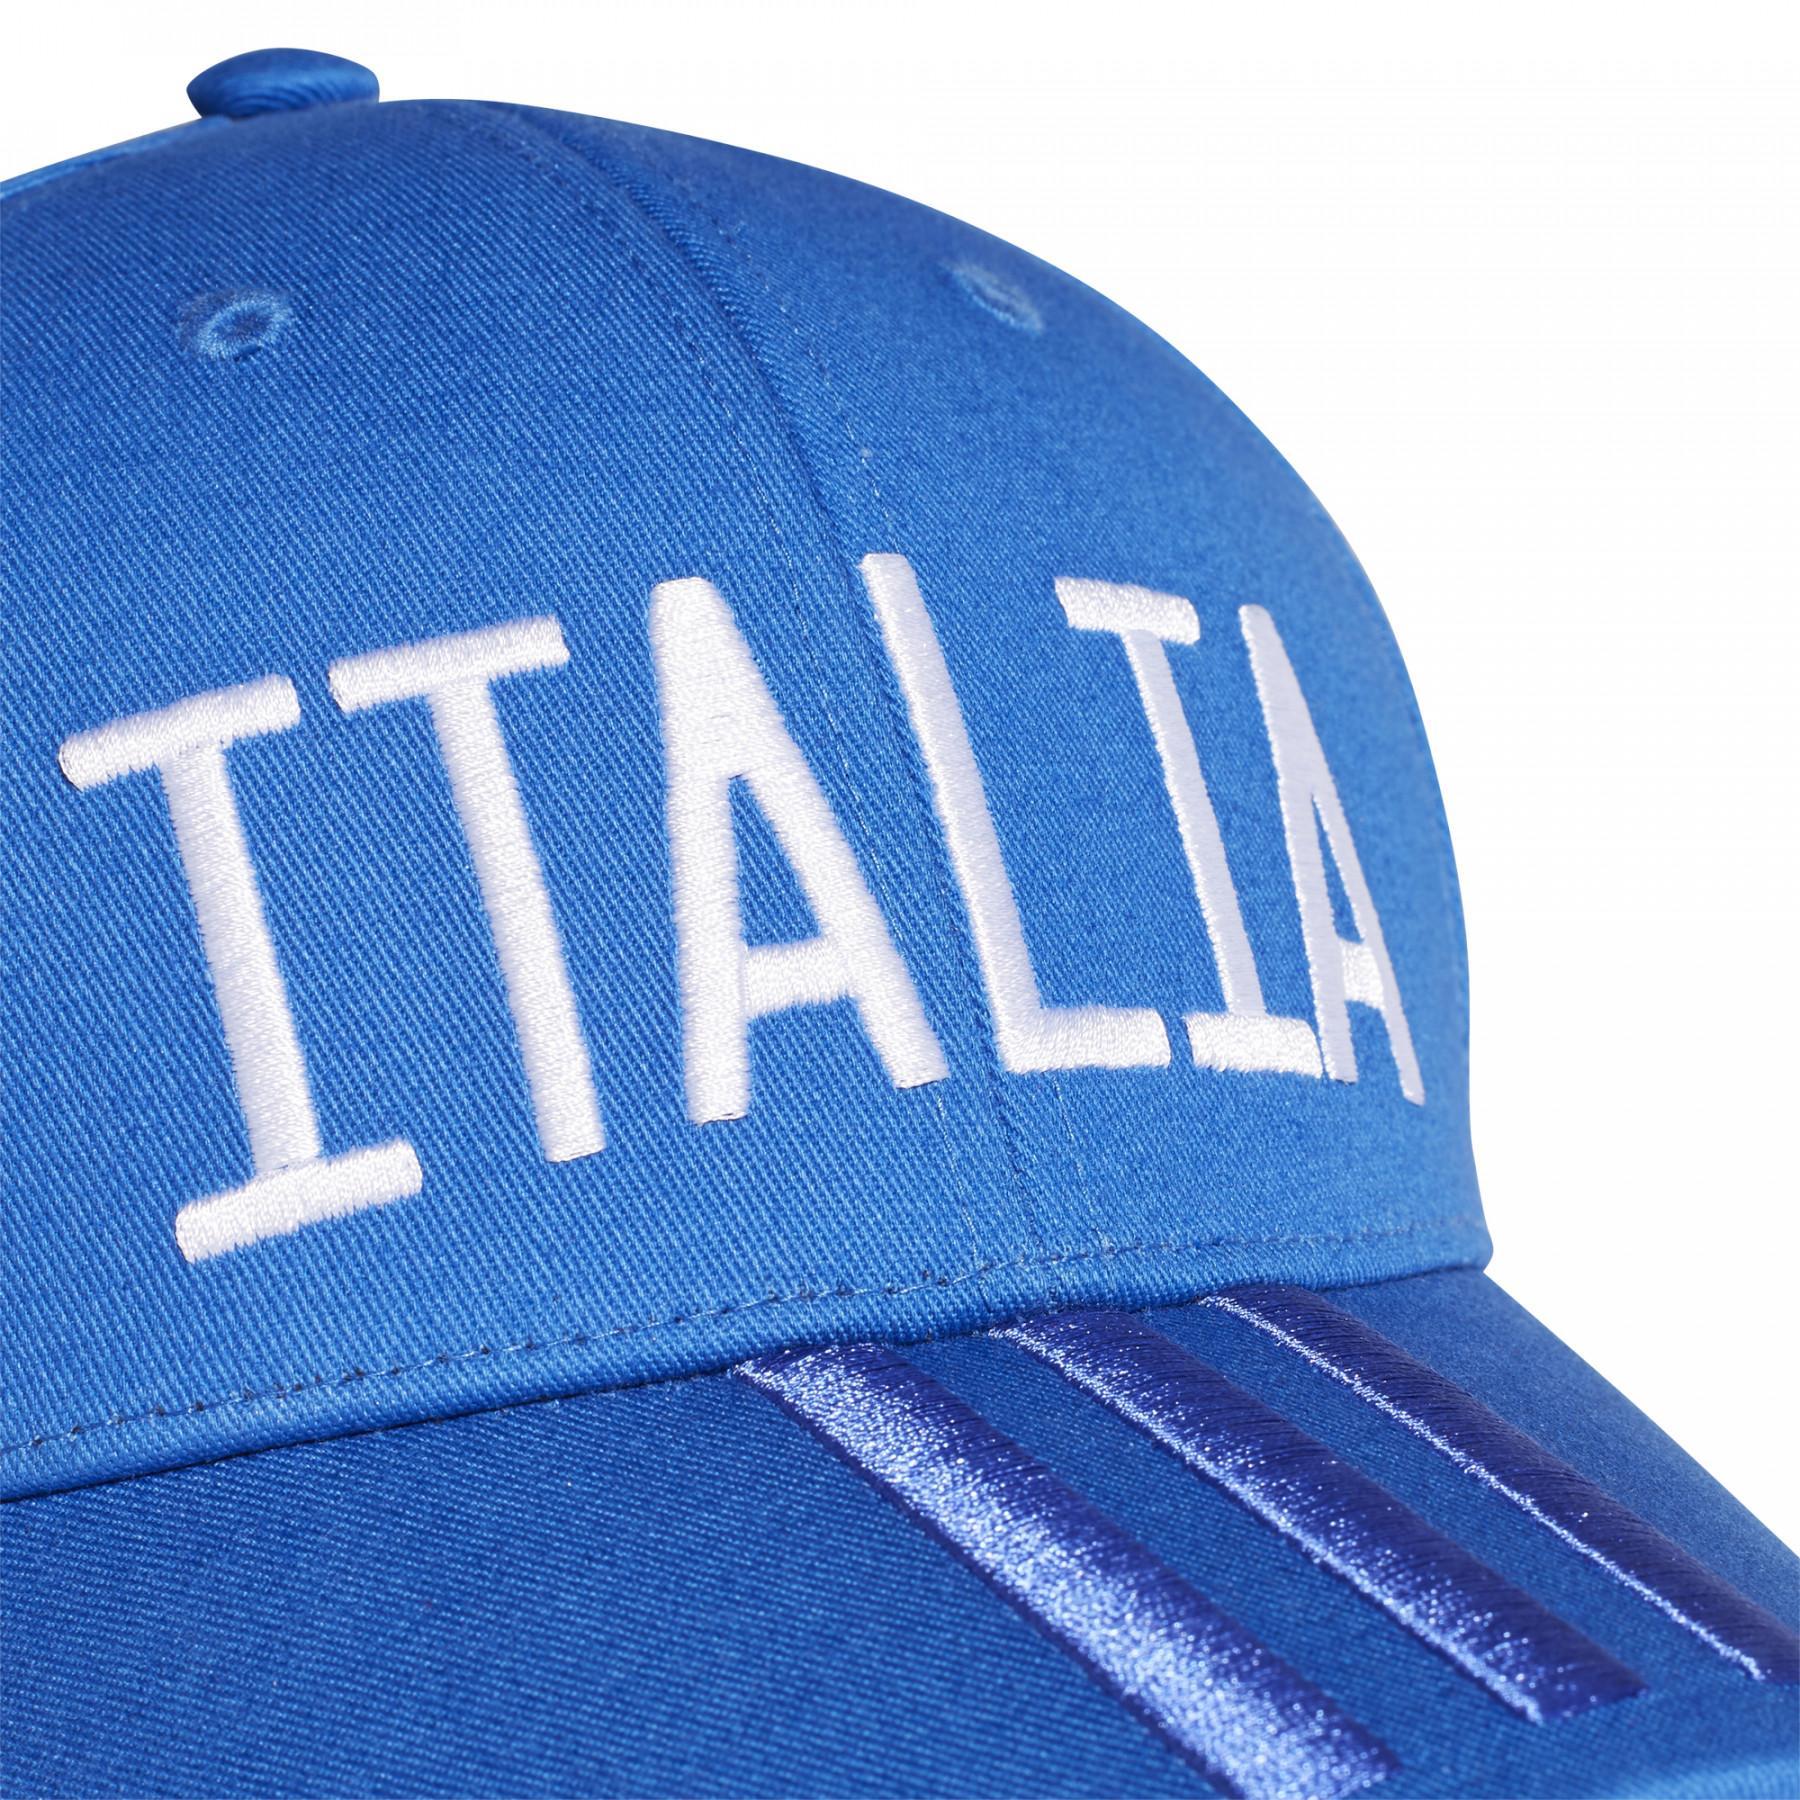 Czapka adidas Italie Fan Euro 2020